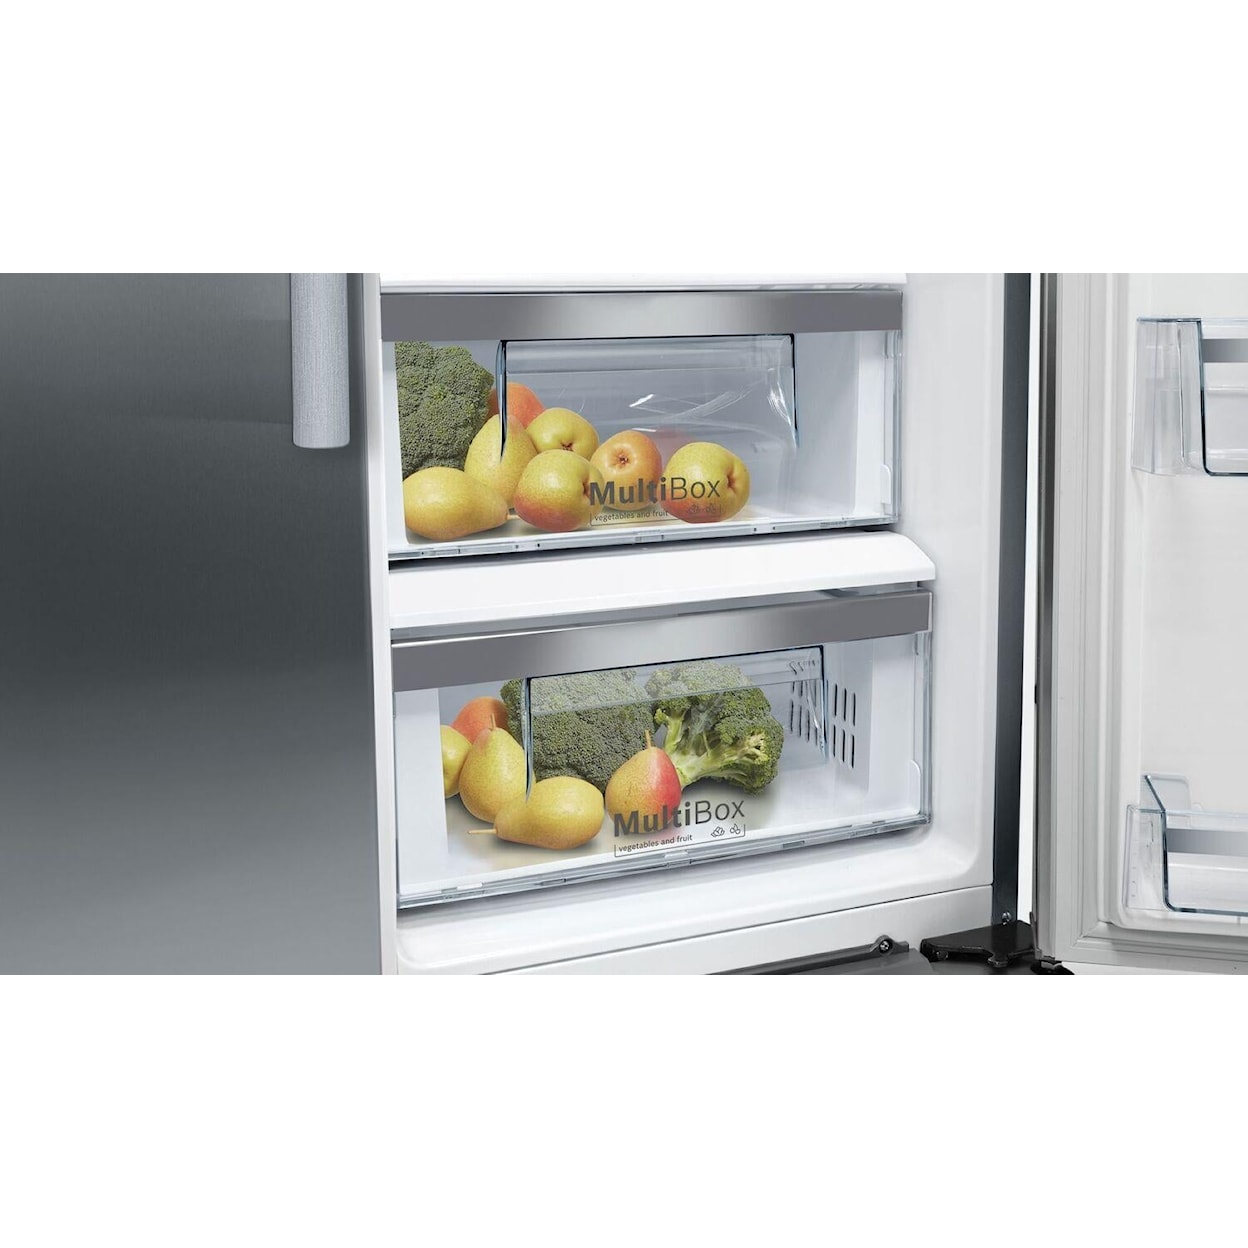 Bosch Refrigerators Side By Side Freestanding Refrigerator